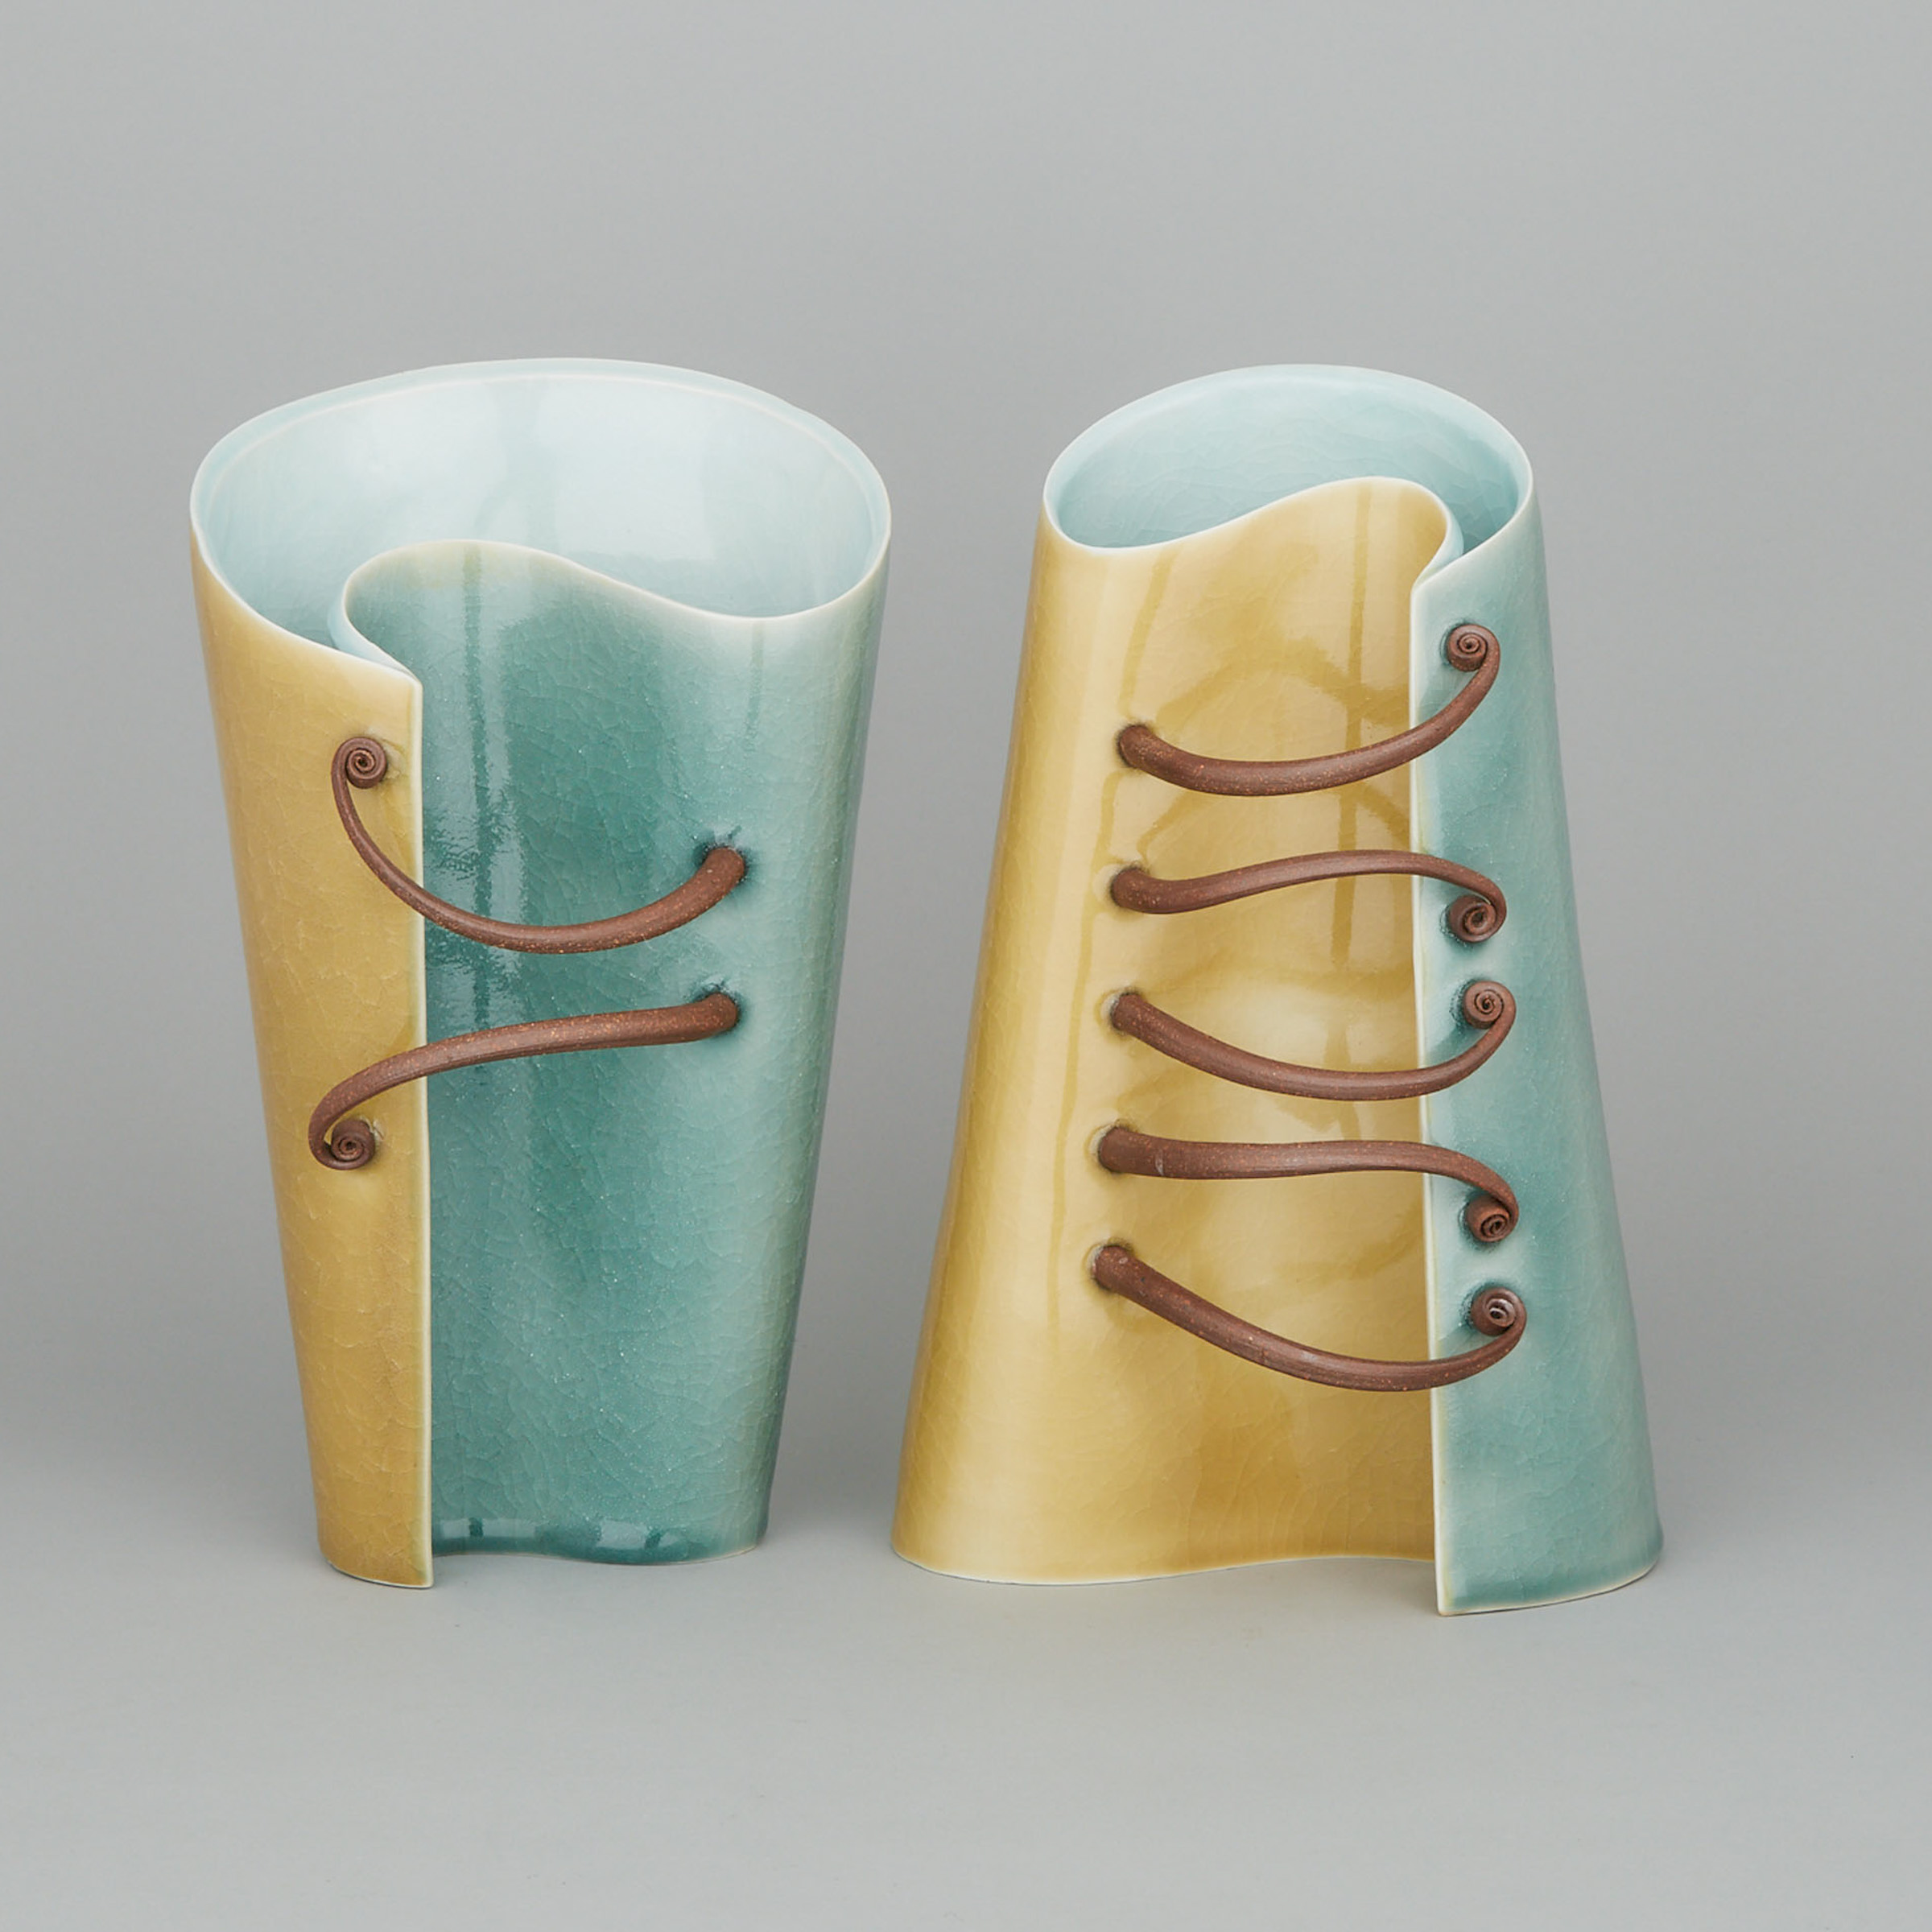 Bill Reddick (Canadian, b.1958), Two Celadon and Olive Glazed Vases, 2011